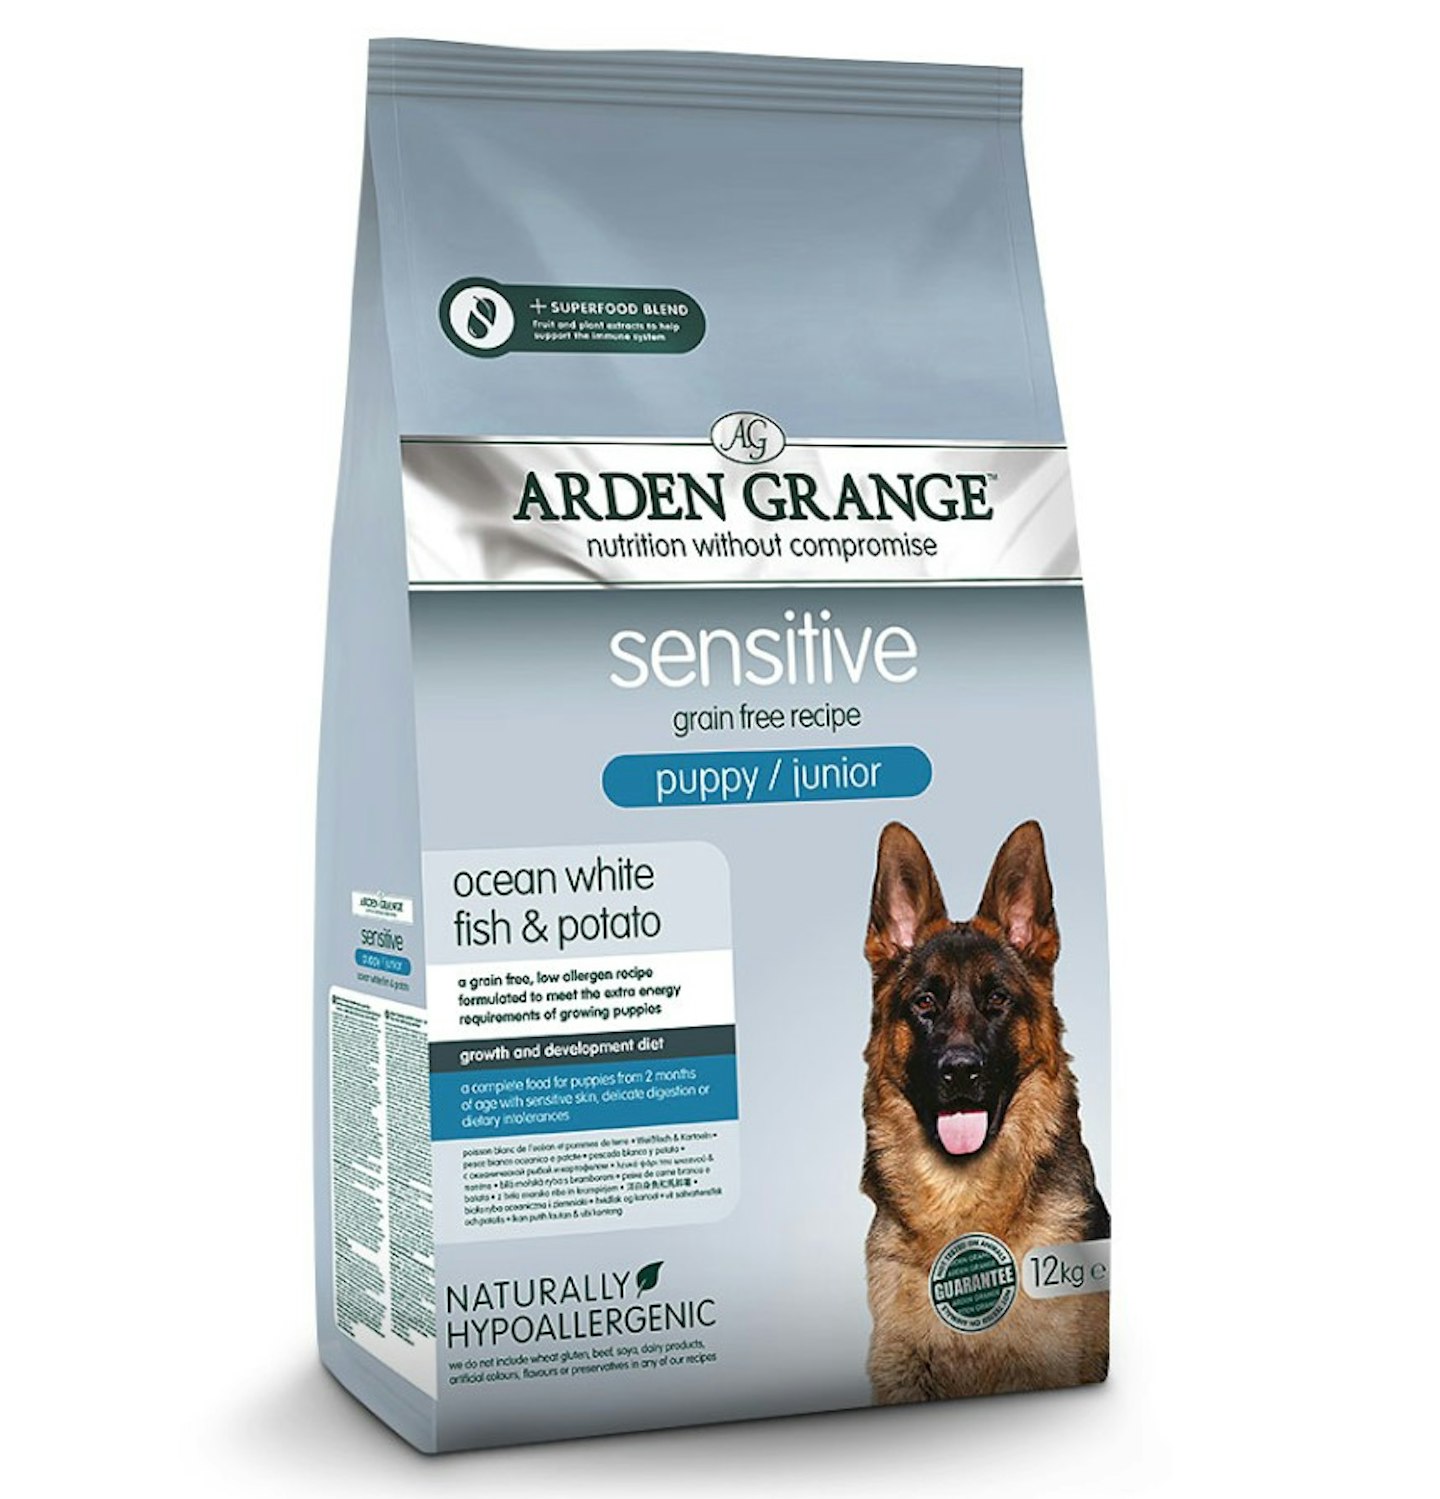 Arden Grange sensitive puppy/junior food 